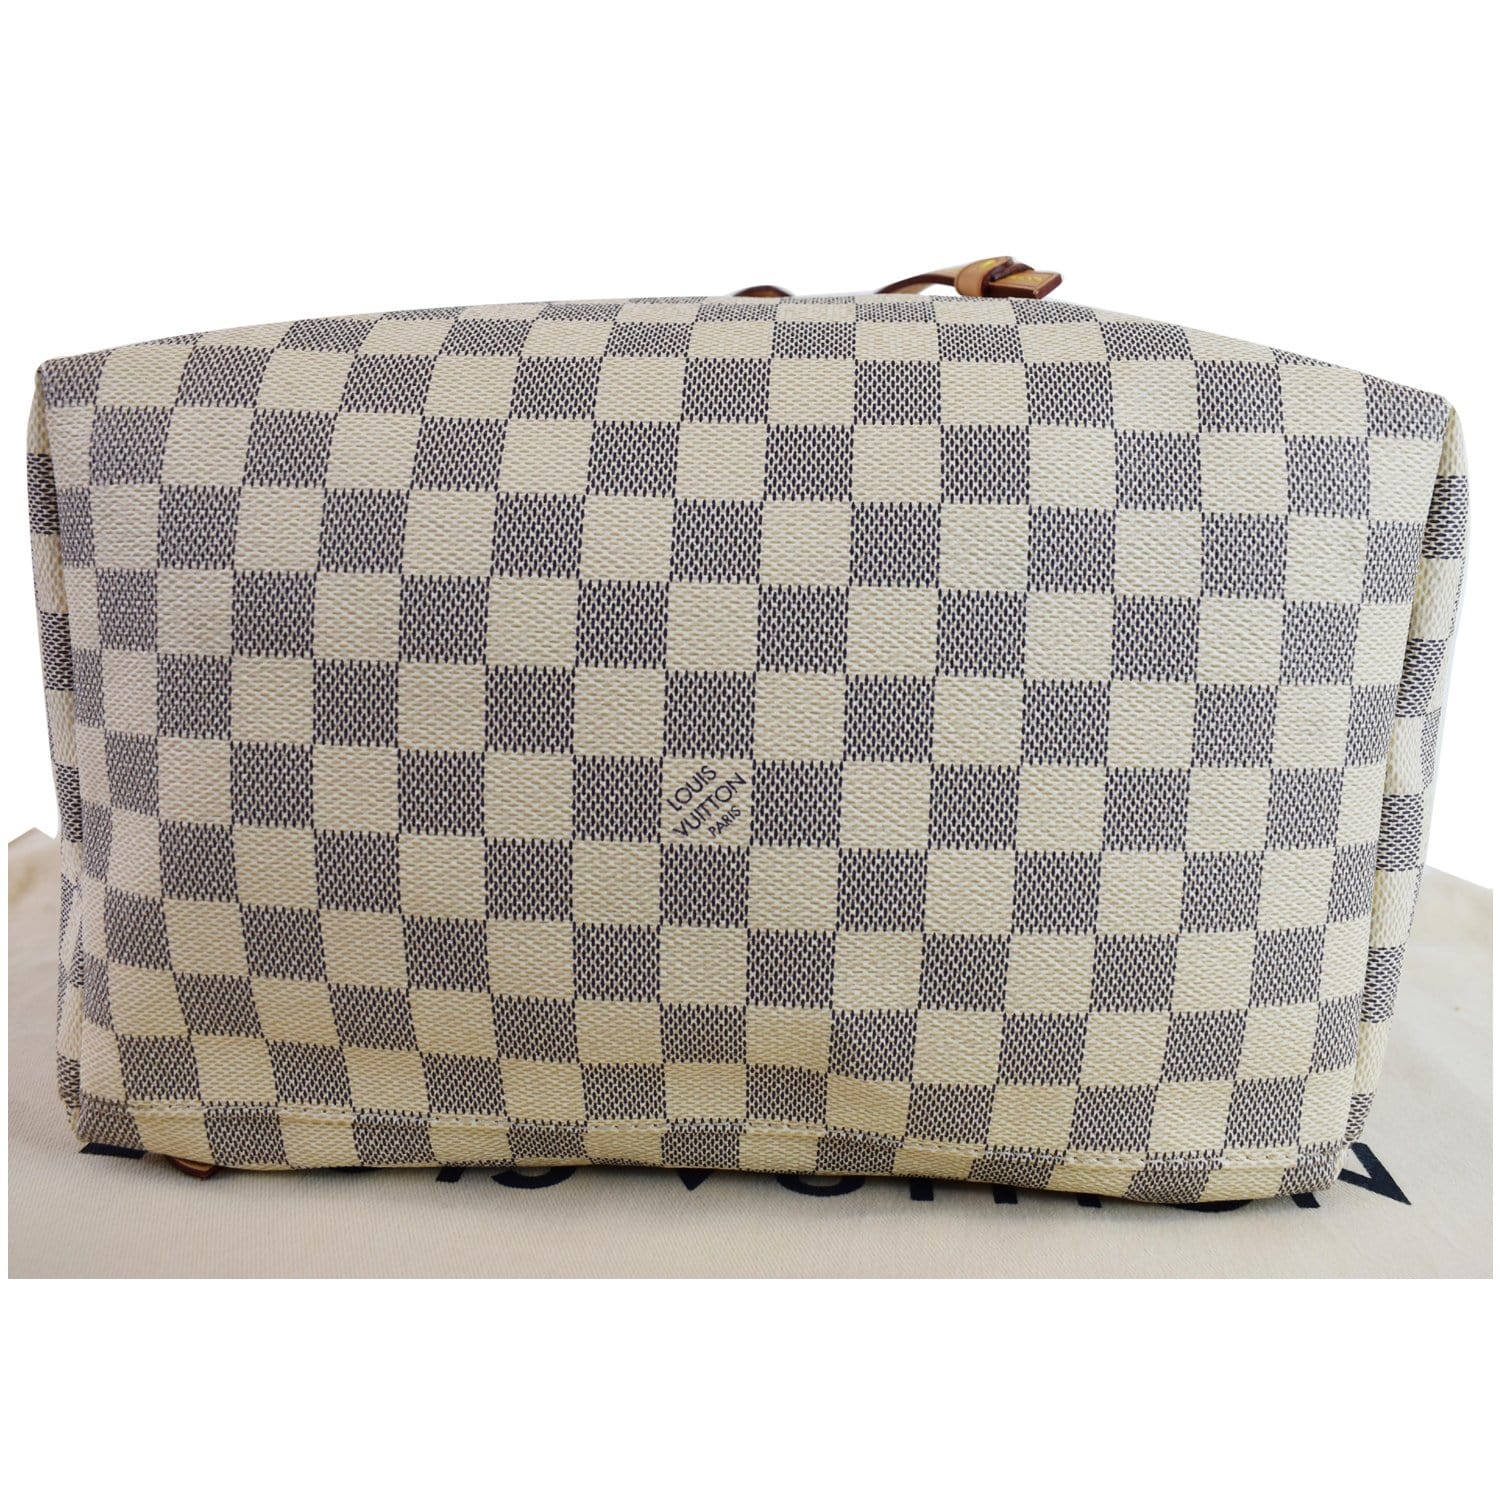 Sold at Auction: Louis Vuitton, Louis Vuitton - Damier Azur Sperone  Backpack - Cream / Blue Top Handle